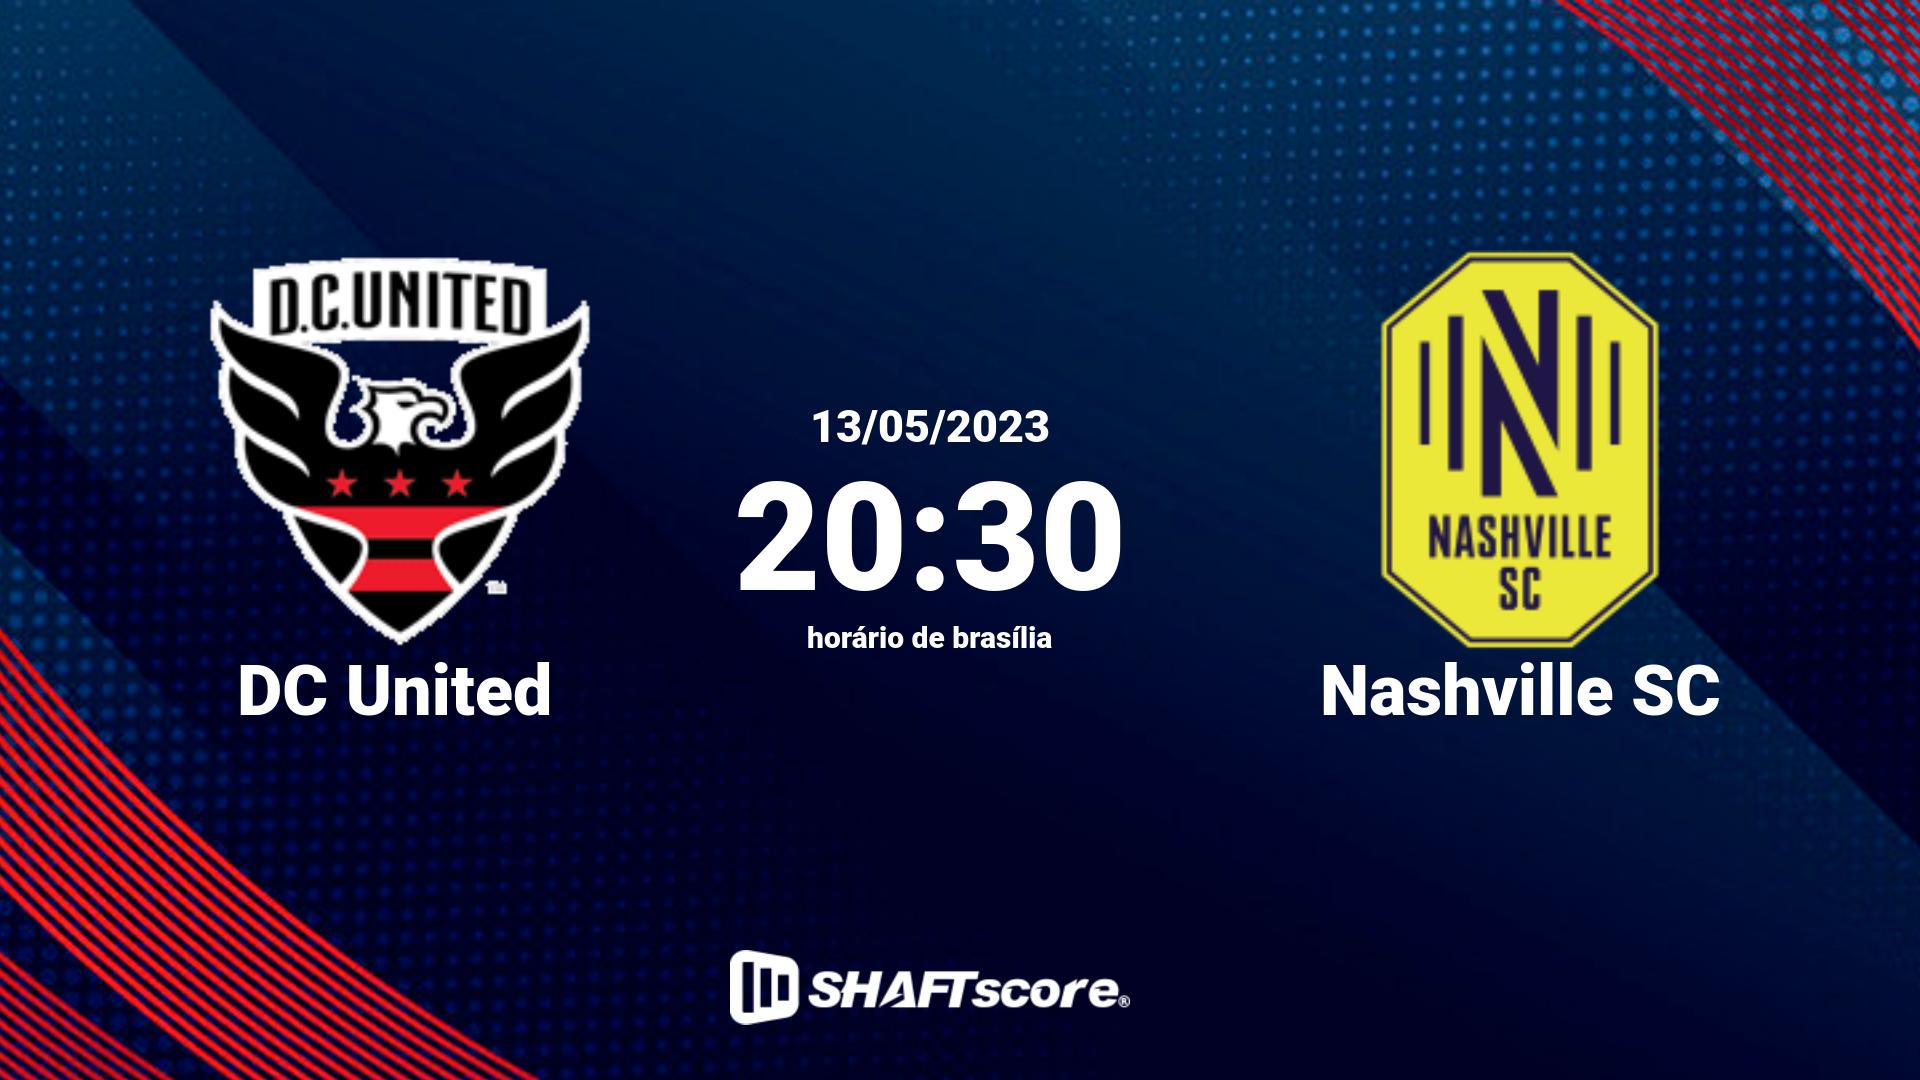 Estatísticas do jogo DC United vs Nashville SC 13.05 20:30